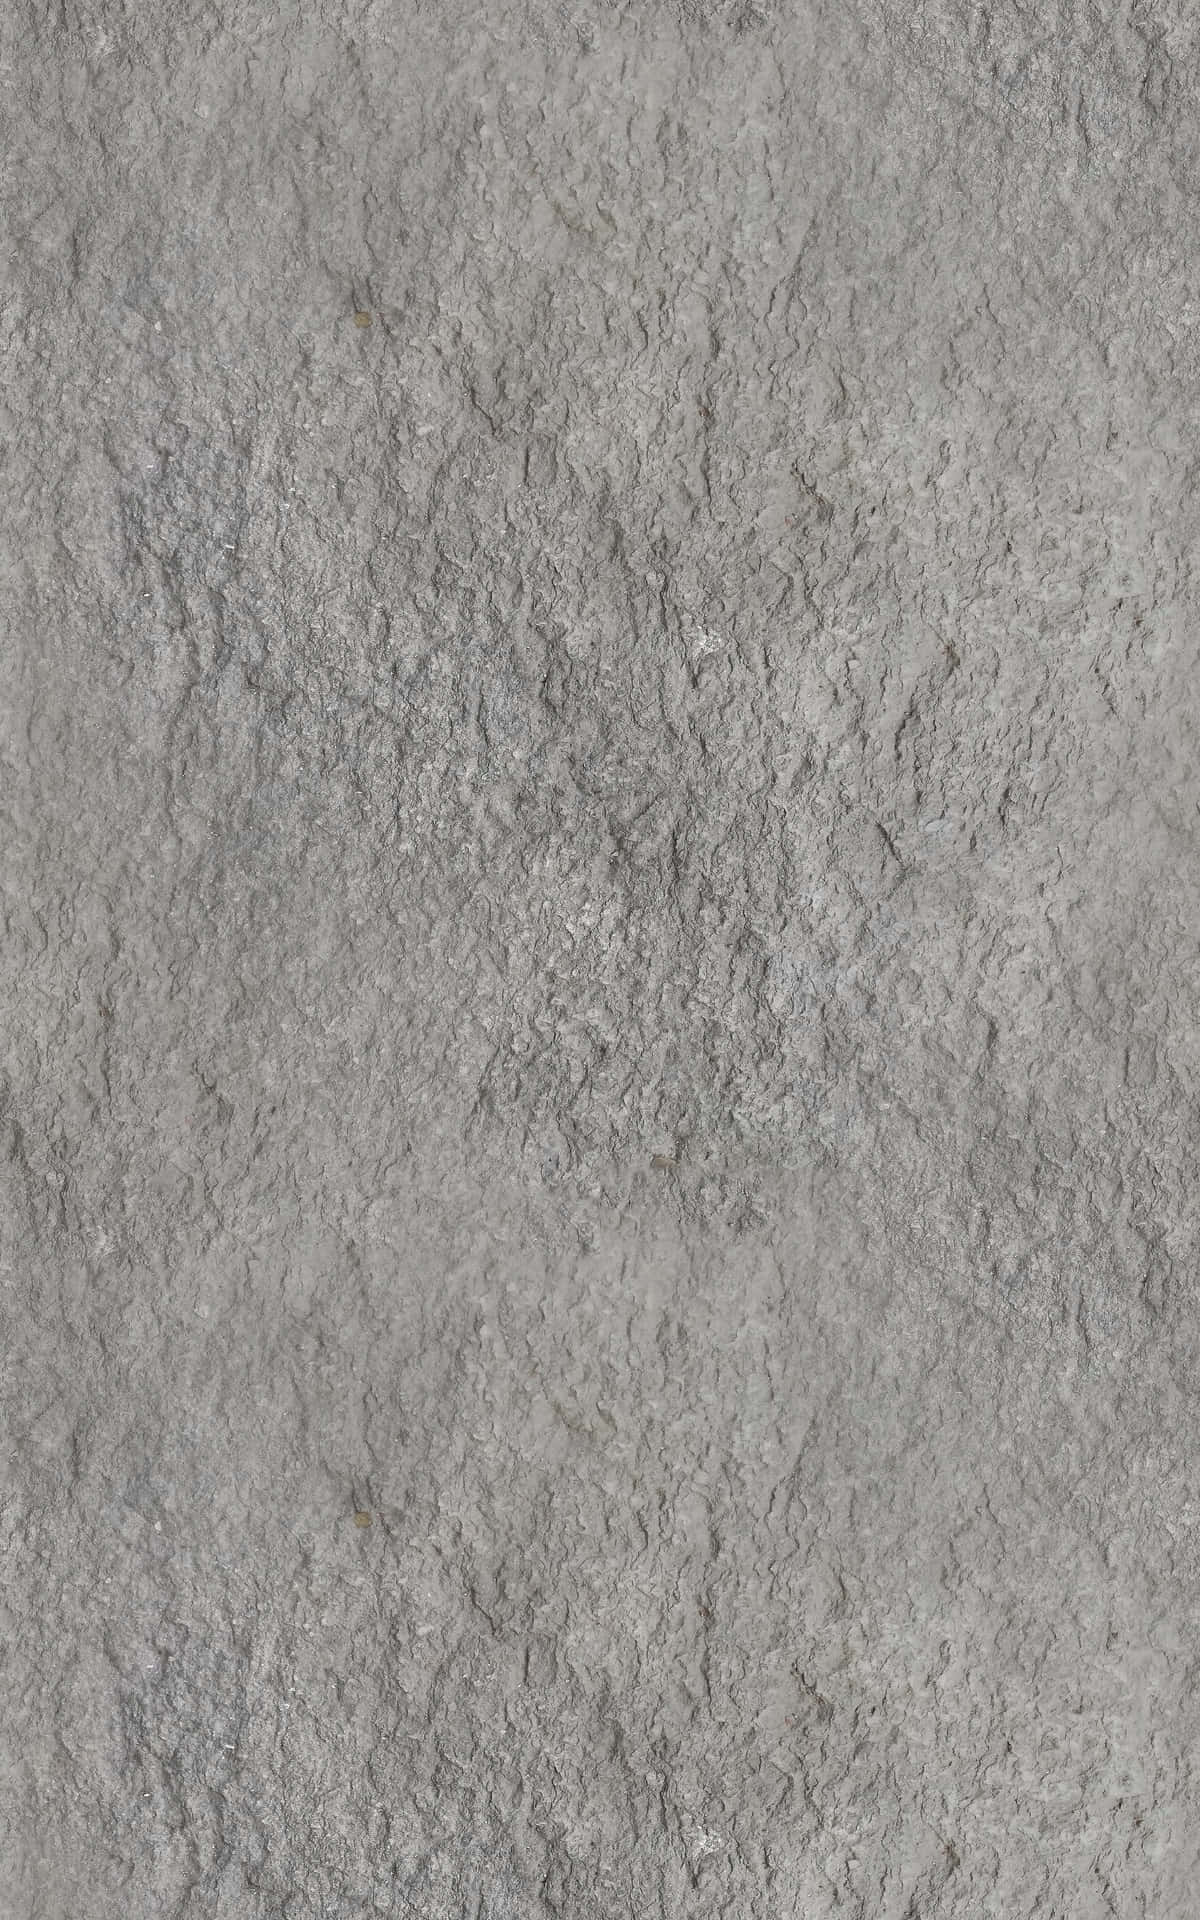 A Close Up Of A Gray Concrete Texture